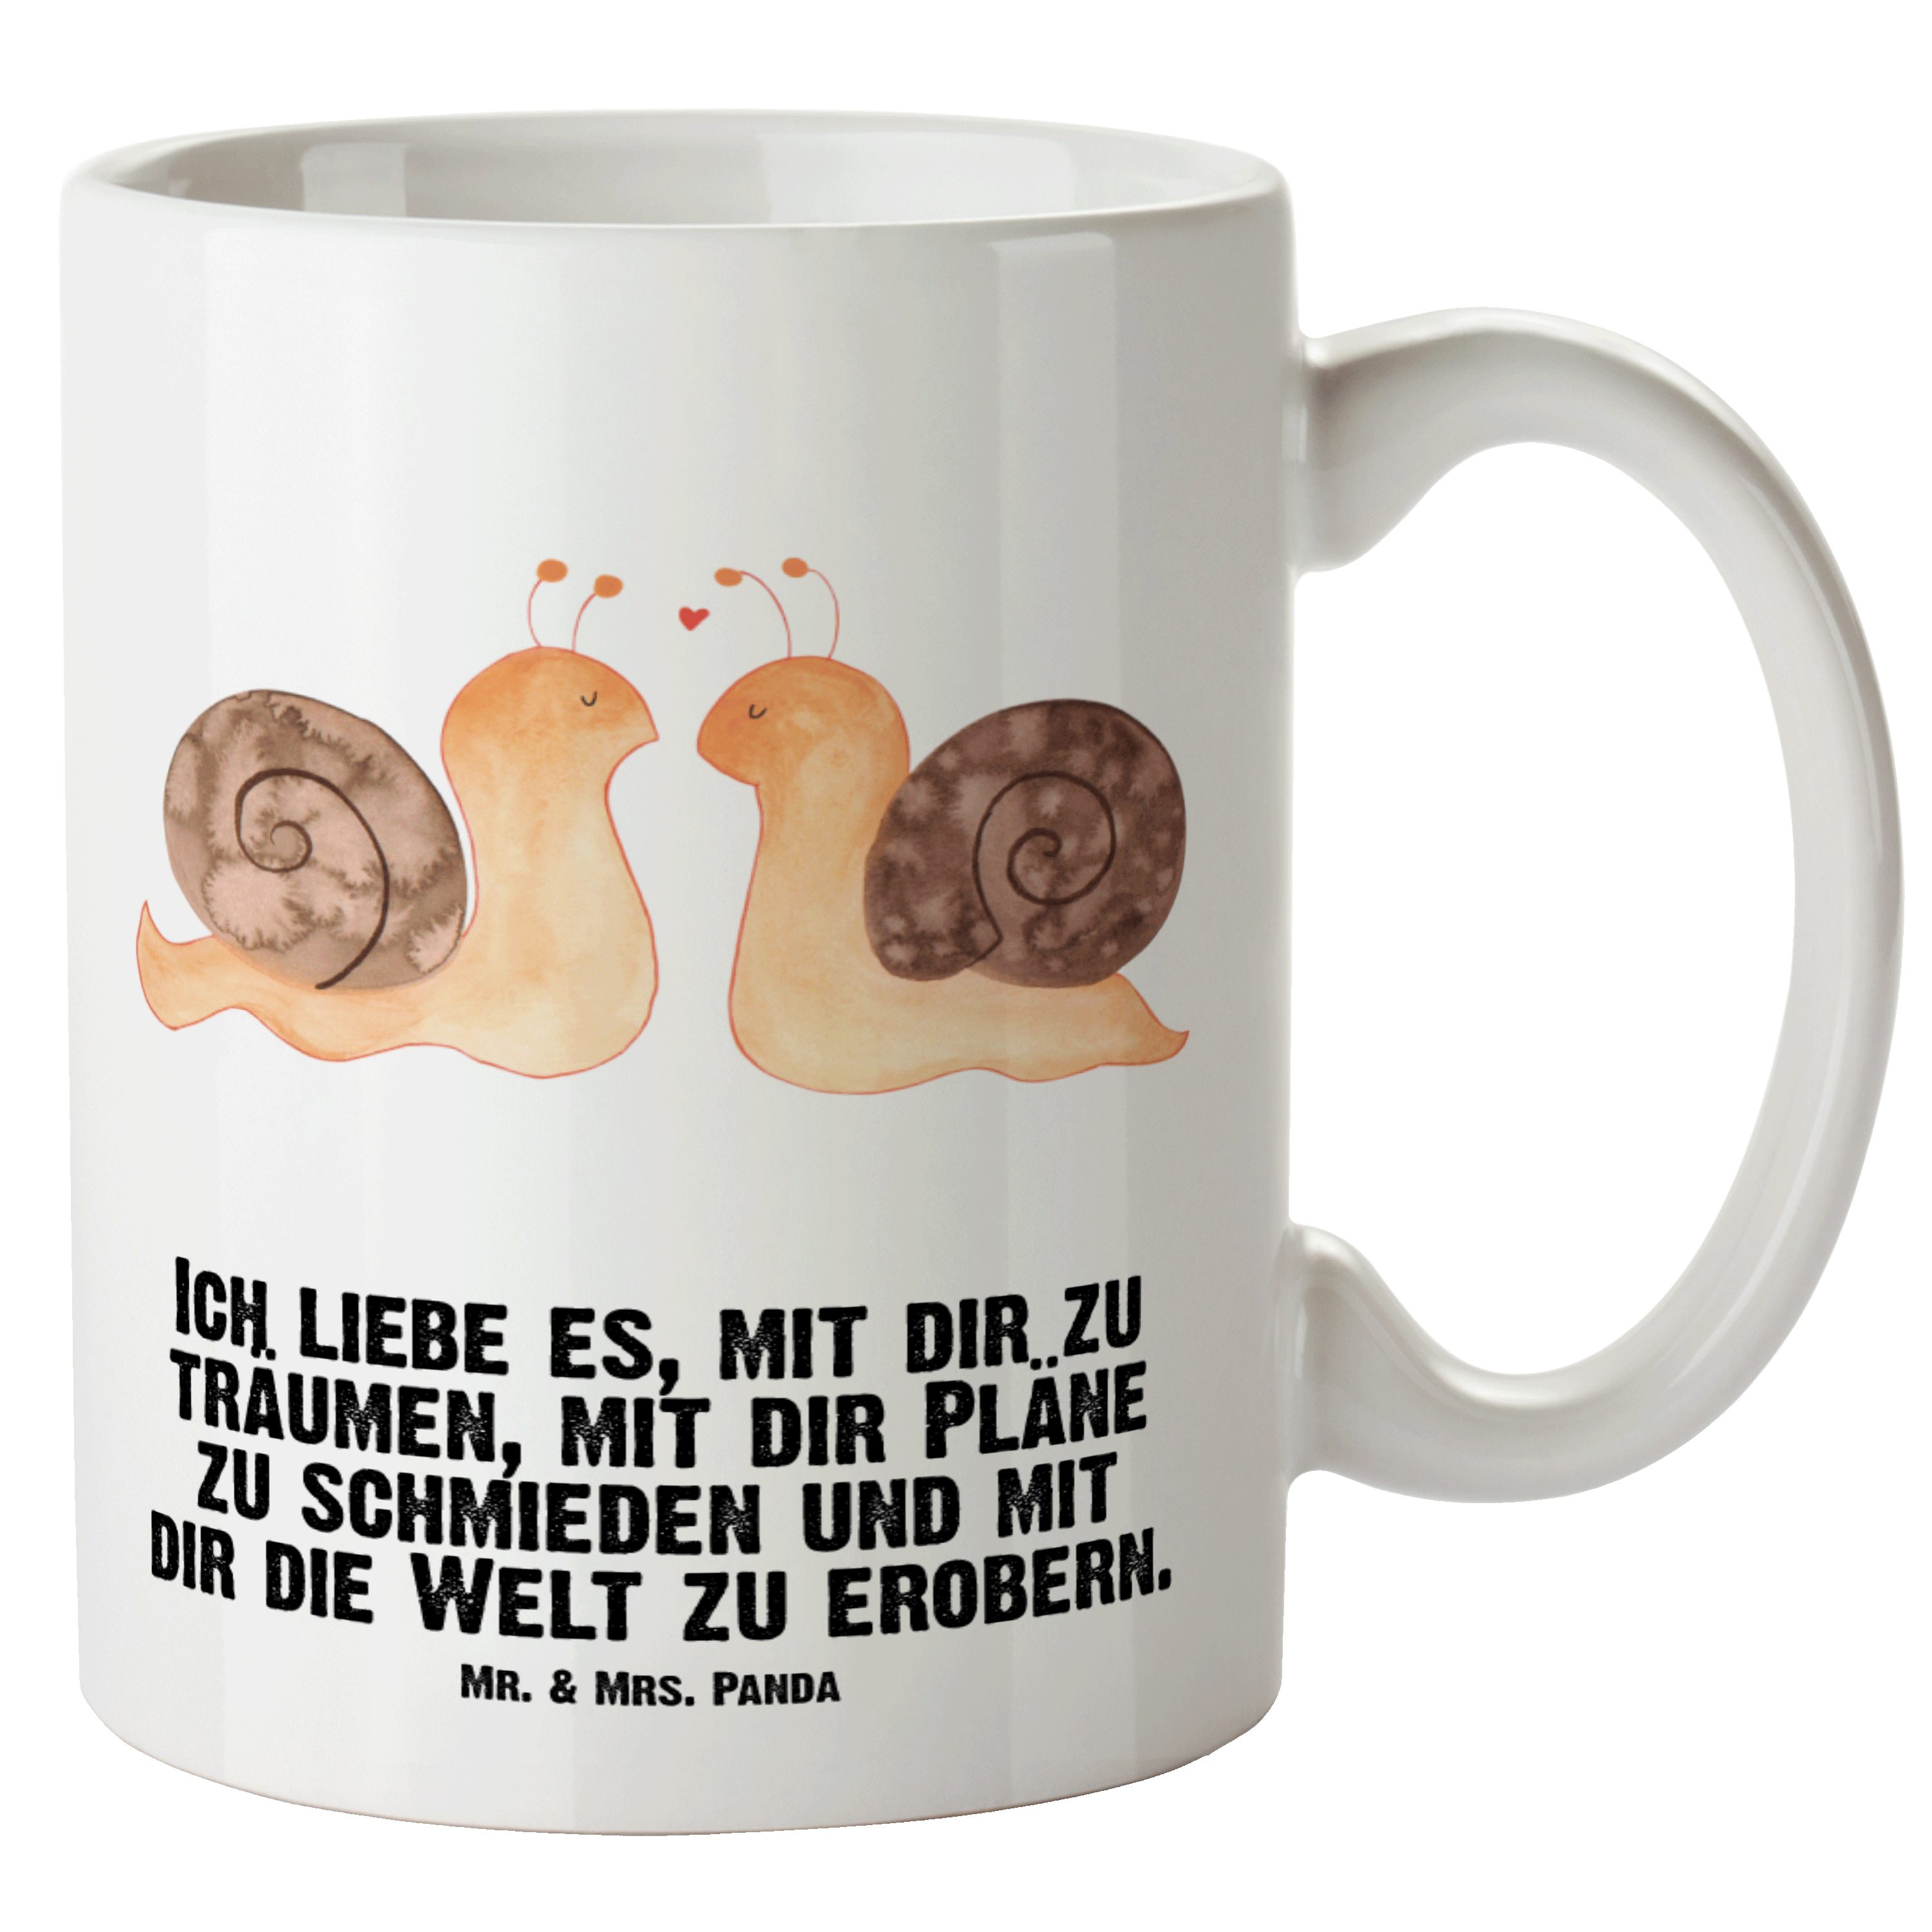 Mr. & Mrs. Panda Tasse Schnecken Liebe - Weiß - Geschenk, Freundin, XL Becher, Grosse Kaffee, XL Tasse Keramik